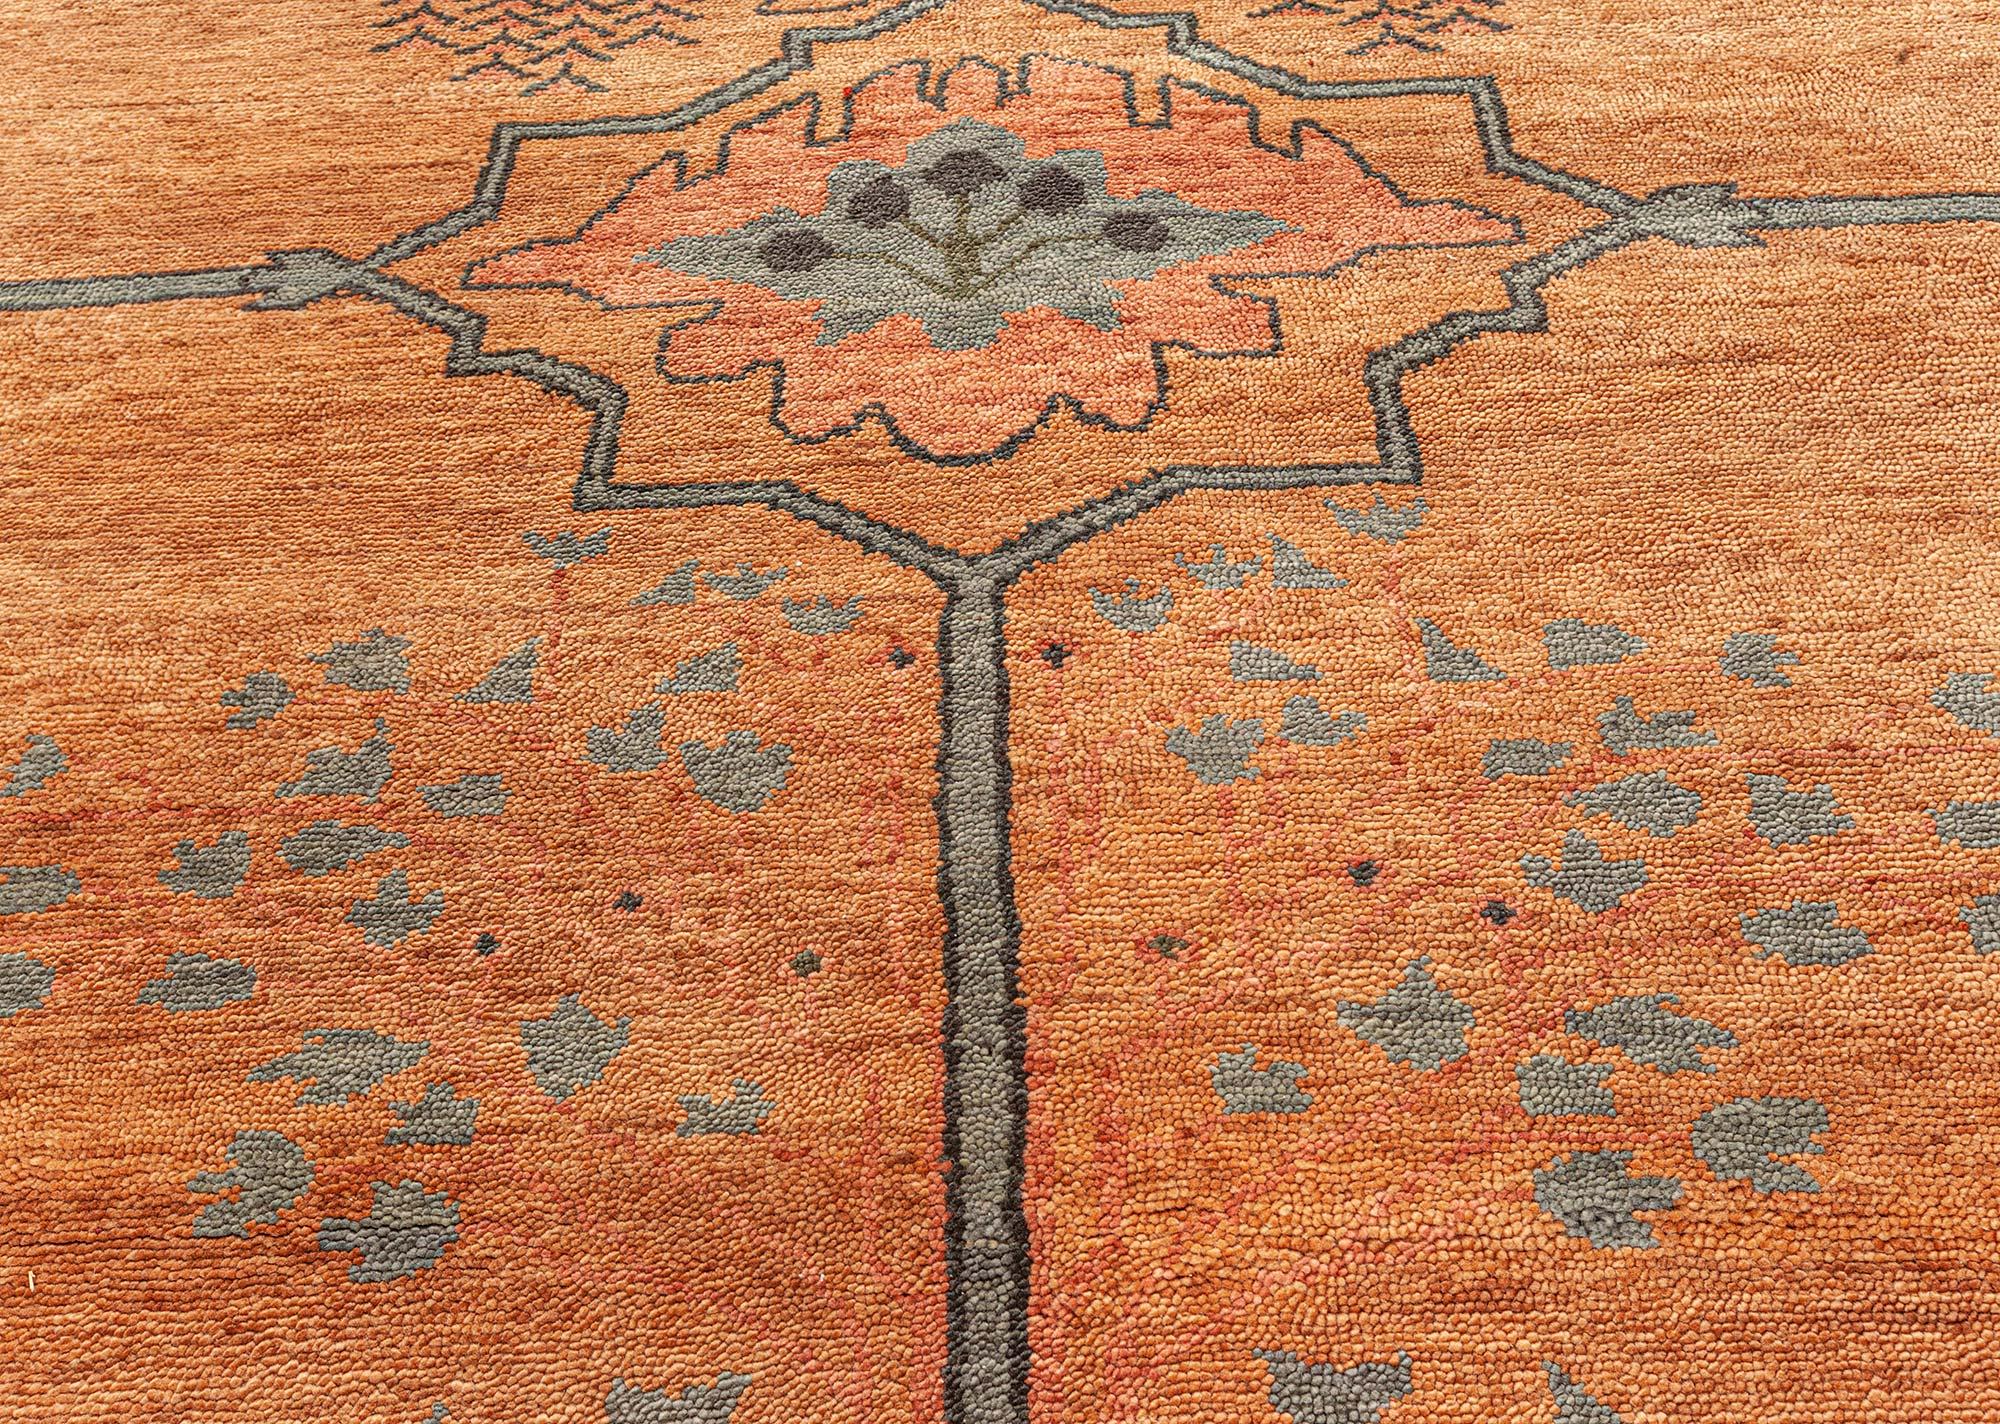 Arts & Crafts style rug by Doris Leslie Blau
Size: 12'2